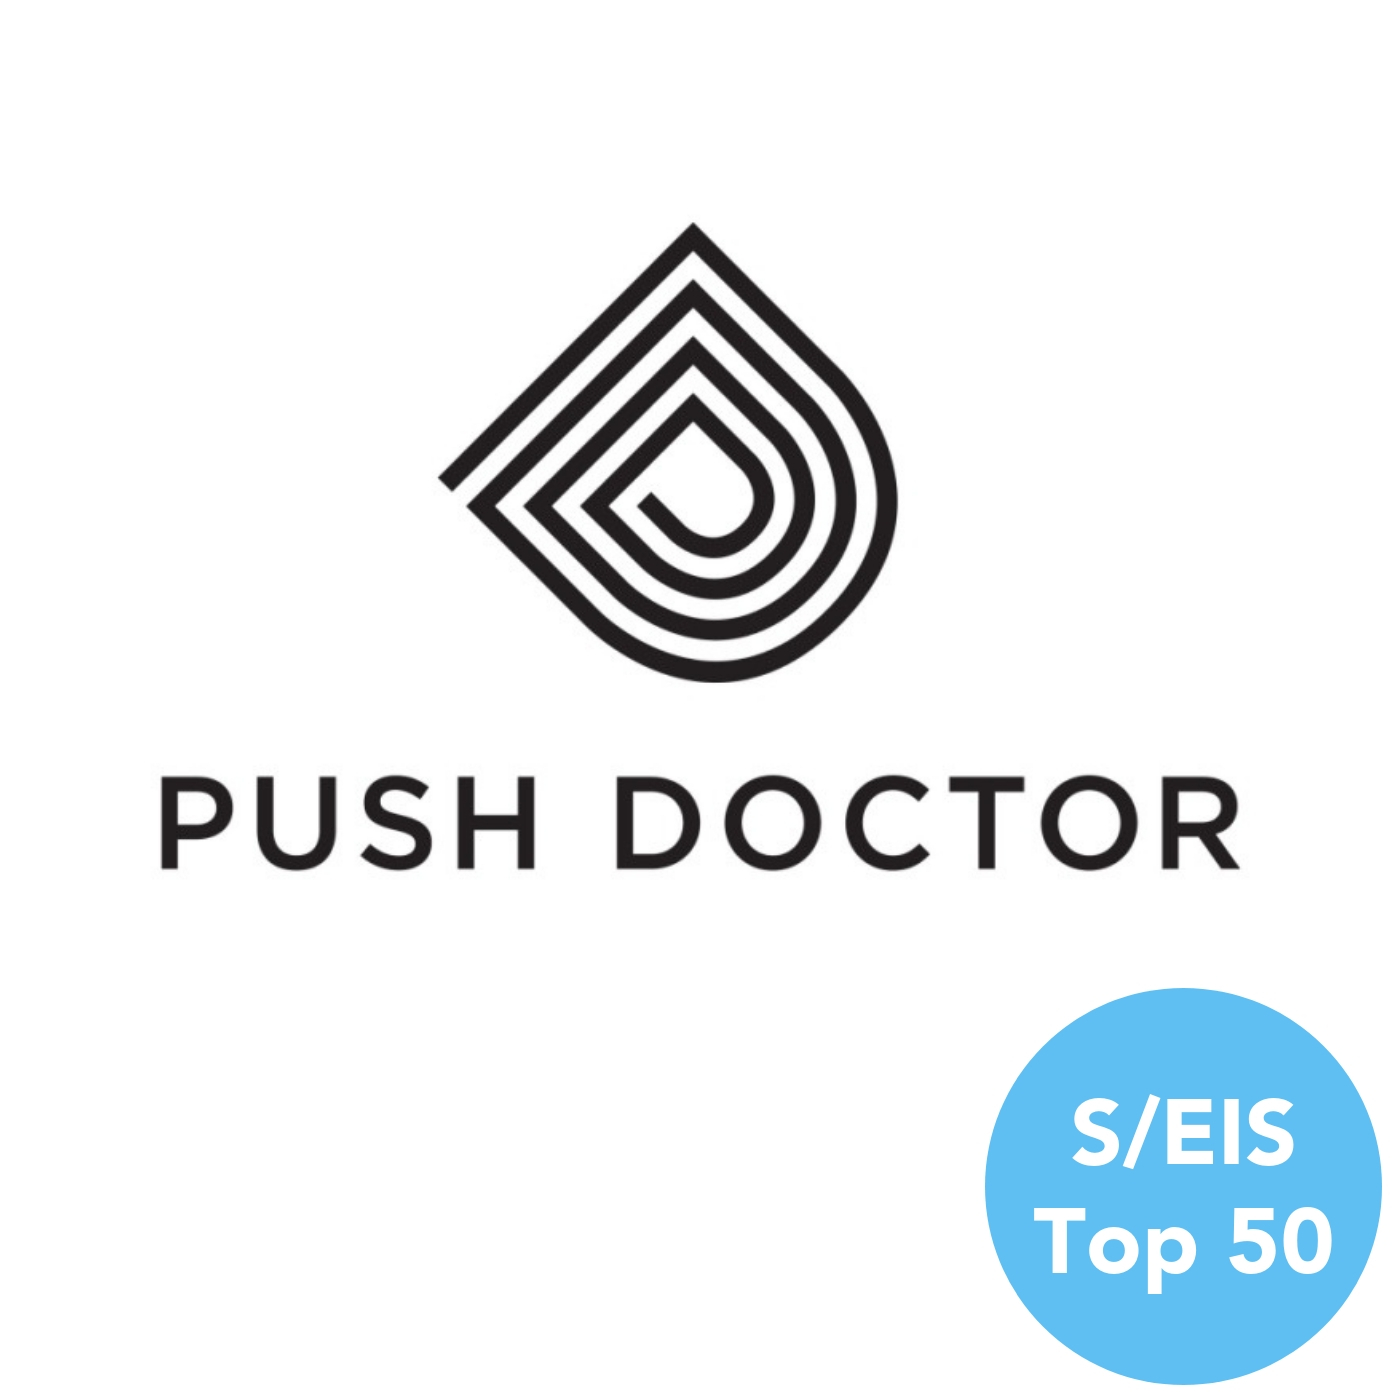 Push Doctor | S/EIS Top 50